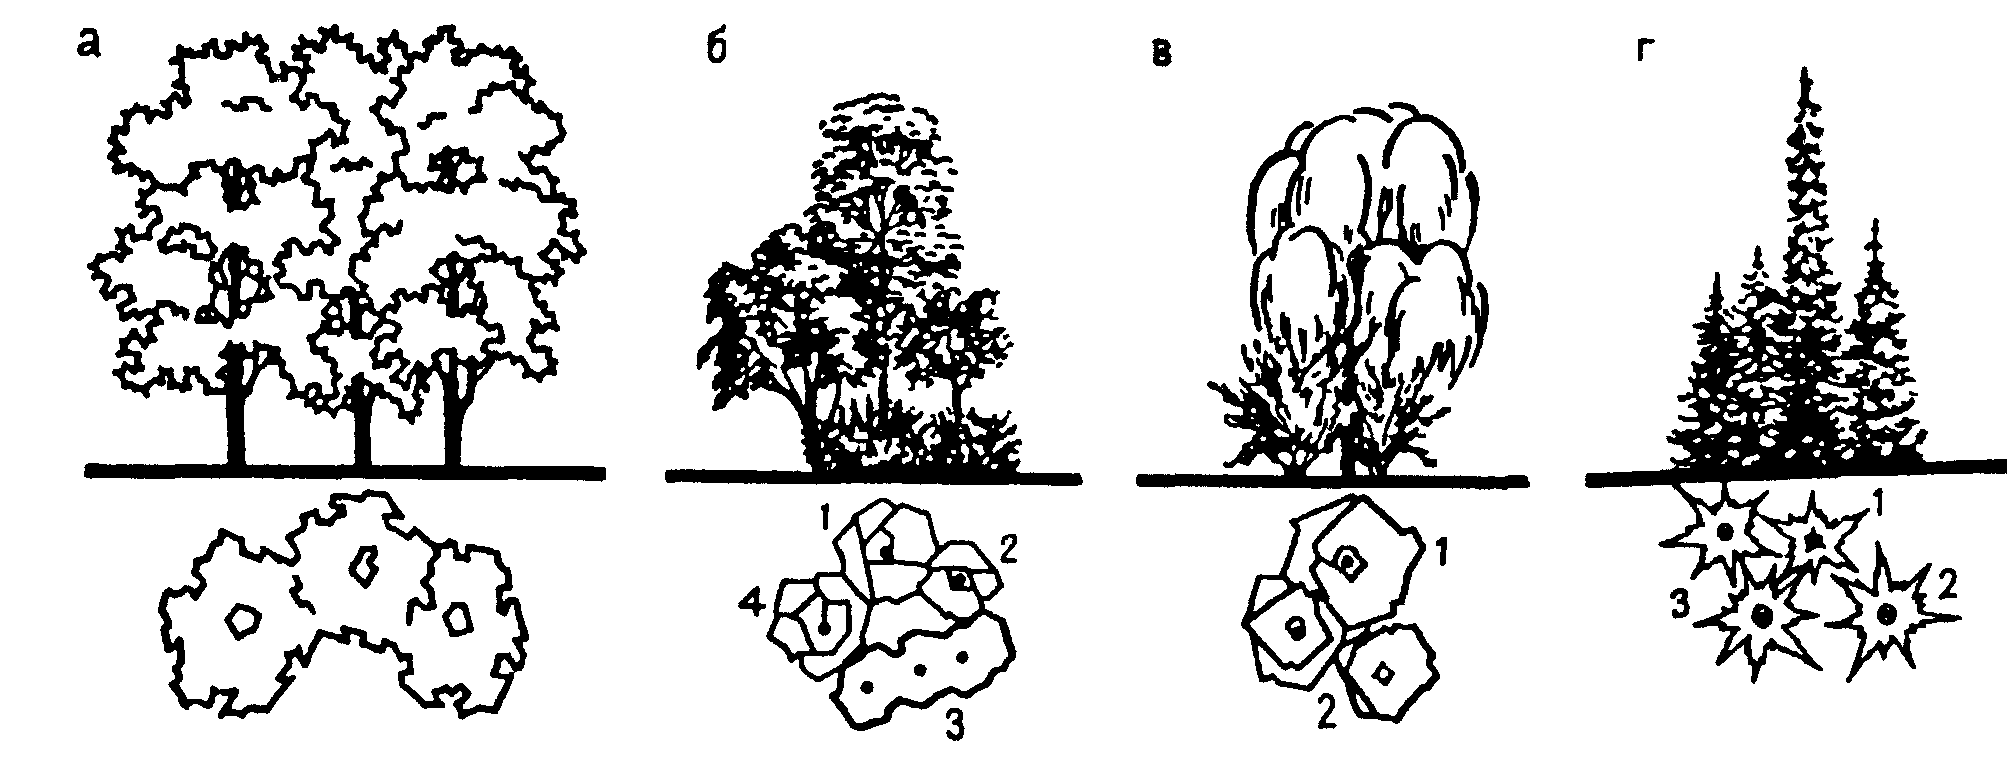 5 группа деревьев. Схема посадки древесно-кустарниковых. Схема древесно кустарниковых насаждений. Схема посадки древесных насаждений. Композиция древесно кустарниковых насаждений рисунок.